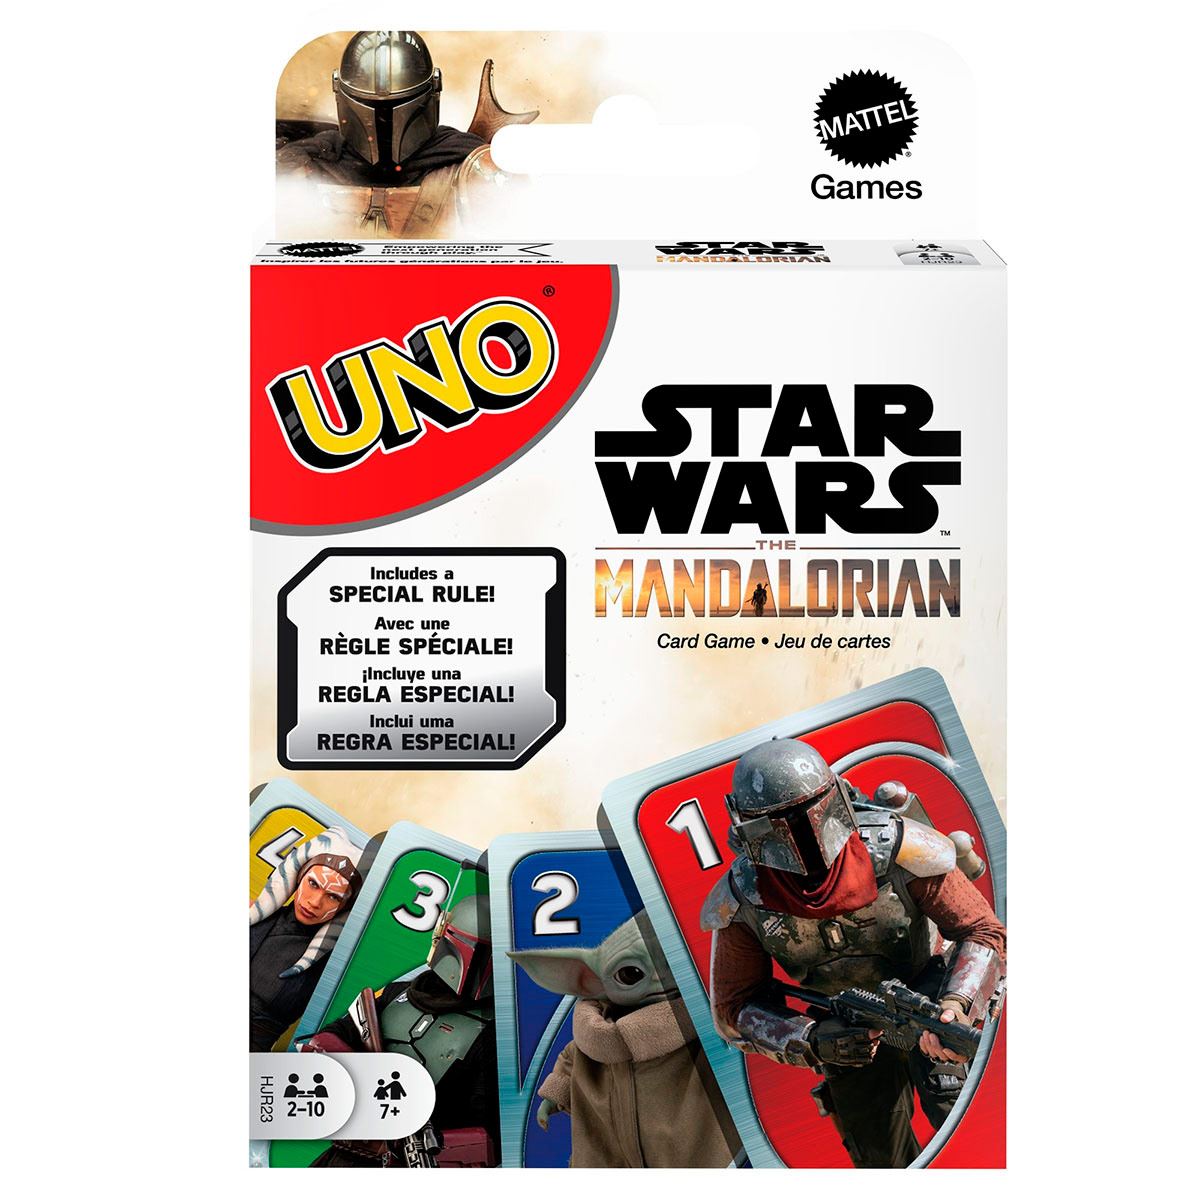 Uno Games: Star Wars - The Mandalorian